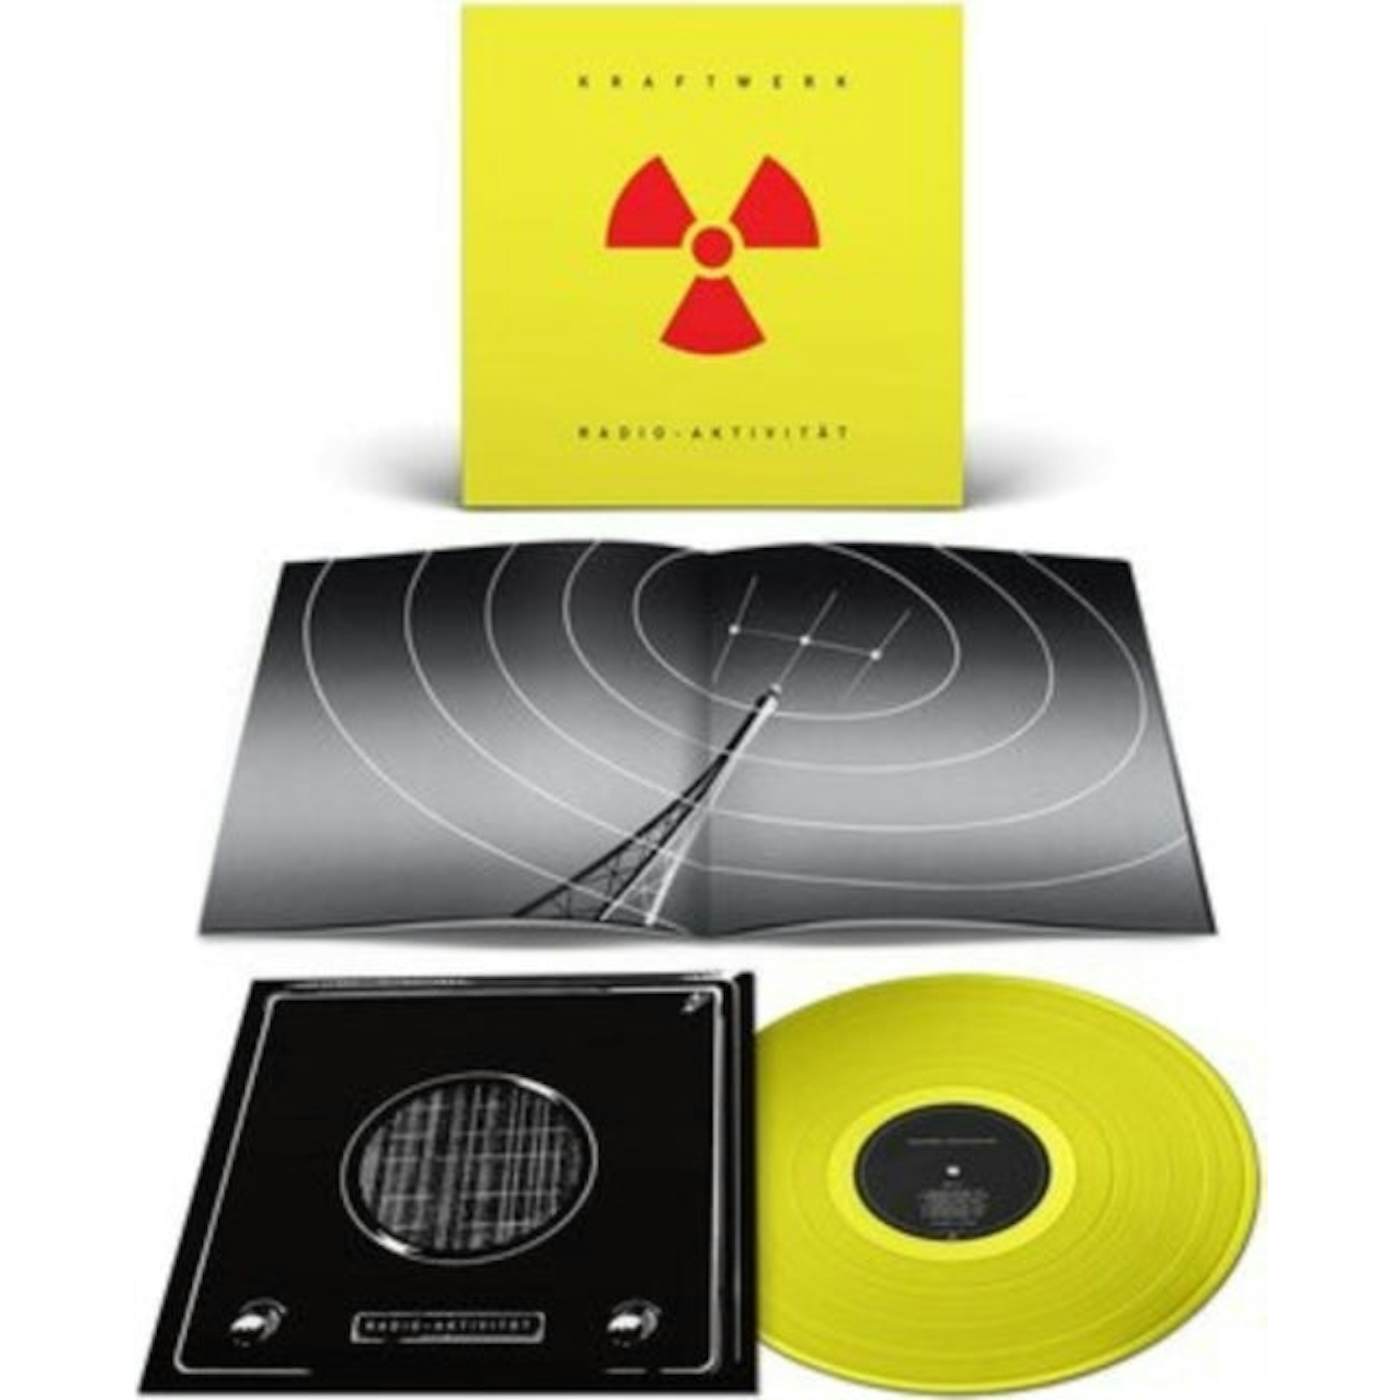 Kraftwerk LP Vinyl Record - Radio-Aktivitat (German Version)